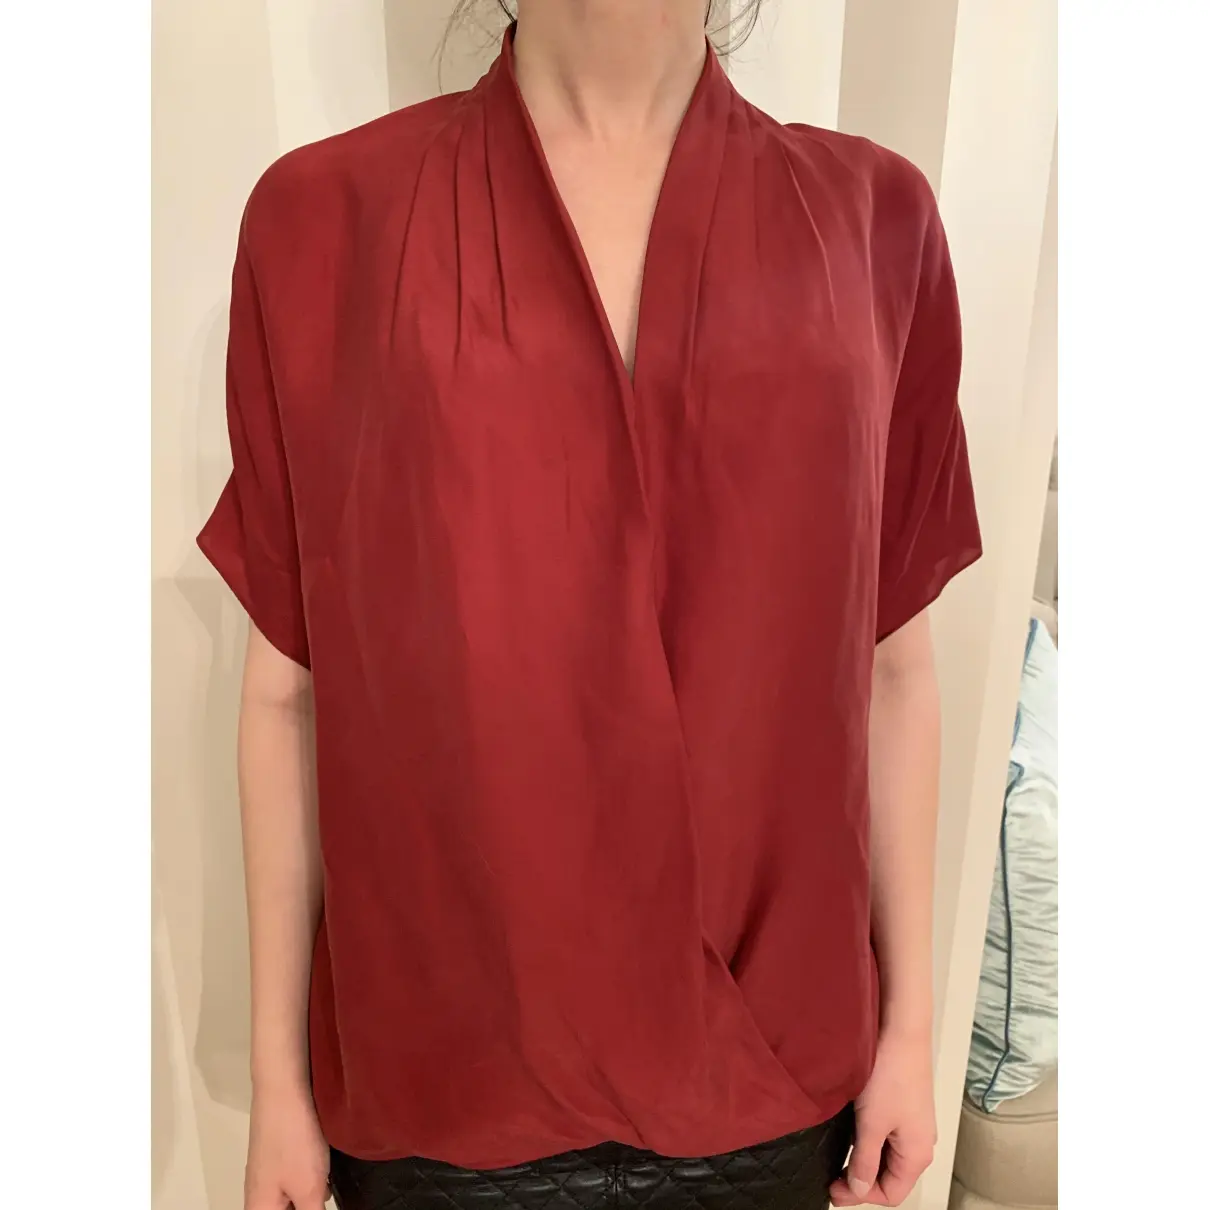 Buy Massimo Dutti Silk blouse online